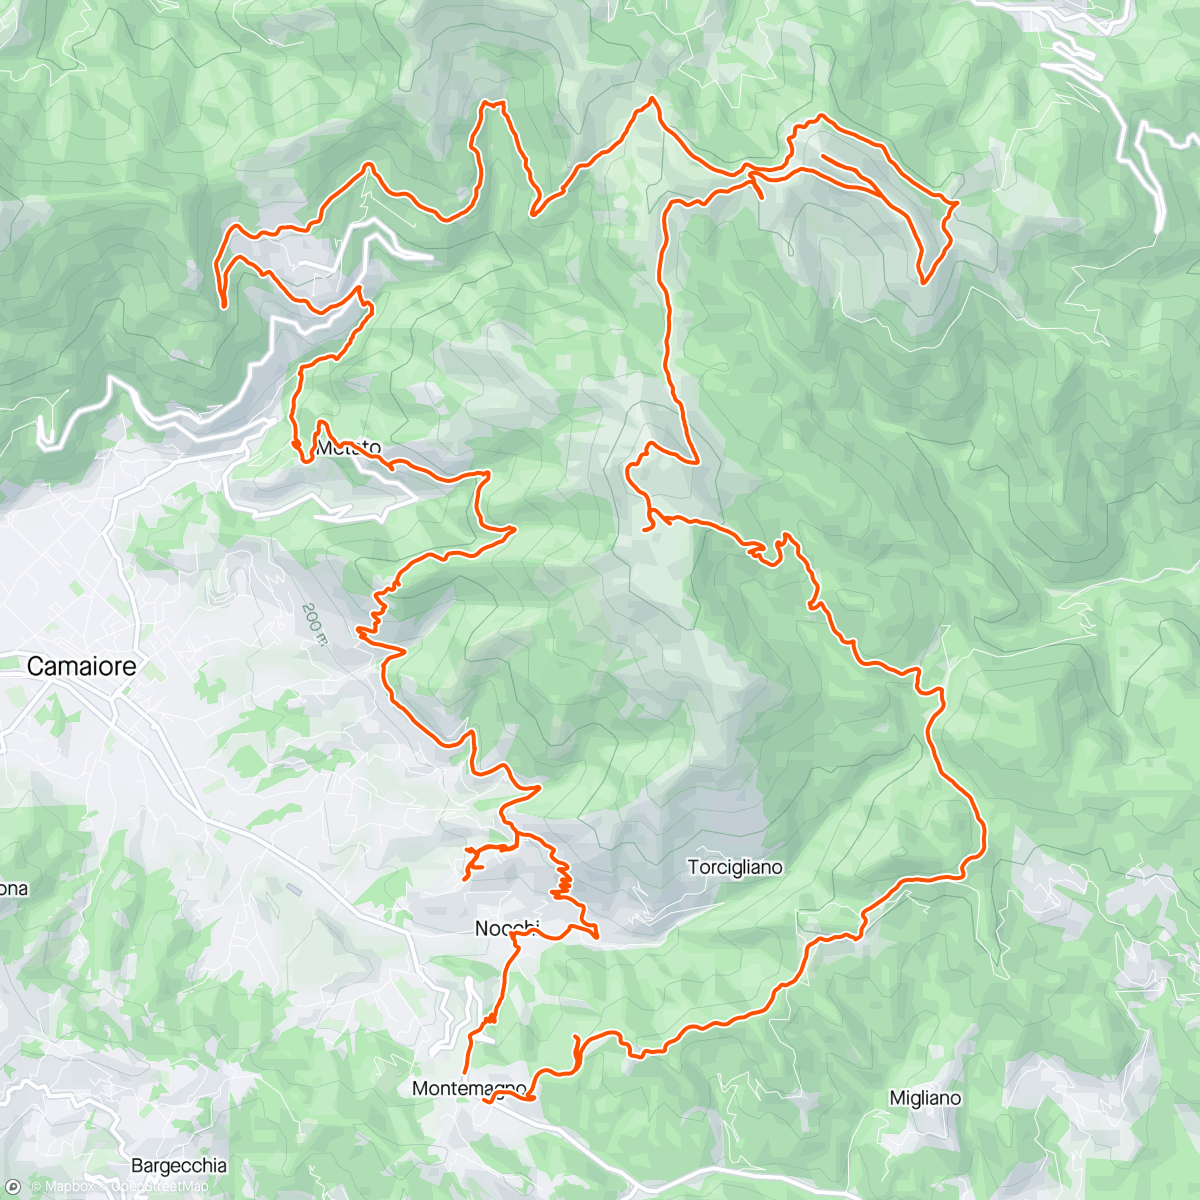 「Maratona Alpi Apuane Meridionali e traversata frazioni Camaioresi Vette M.Prano M.Prana M.Piglione ⛰️⛰️⛰️🔝🔝🔝💪🏼🤙🏻」活動的地圖